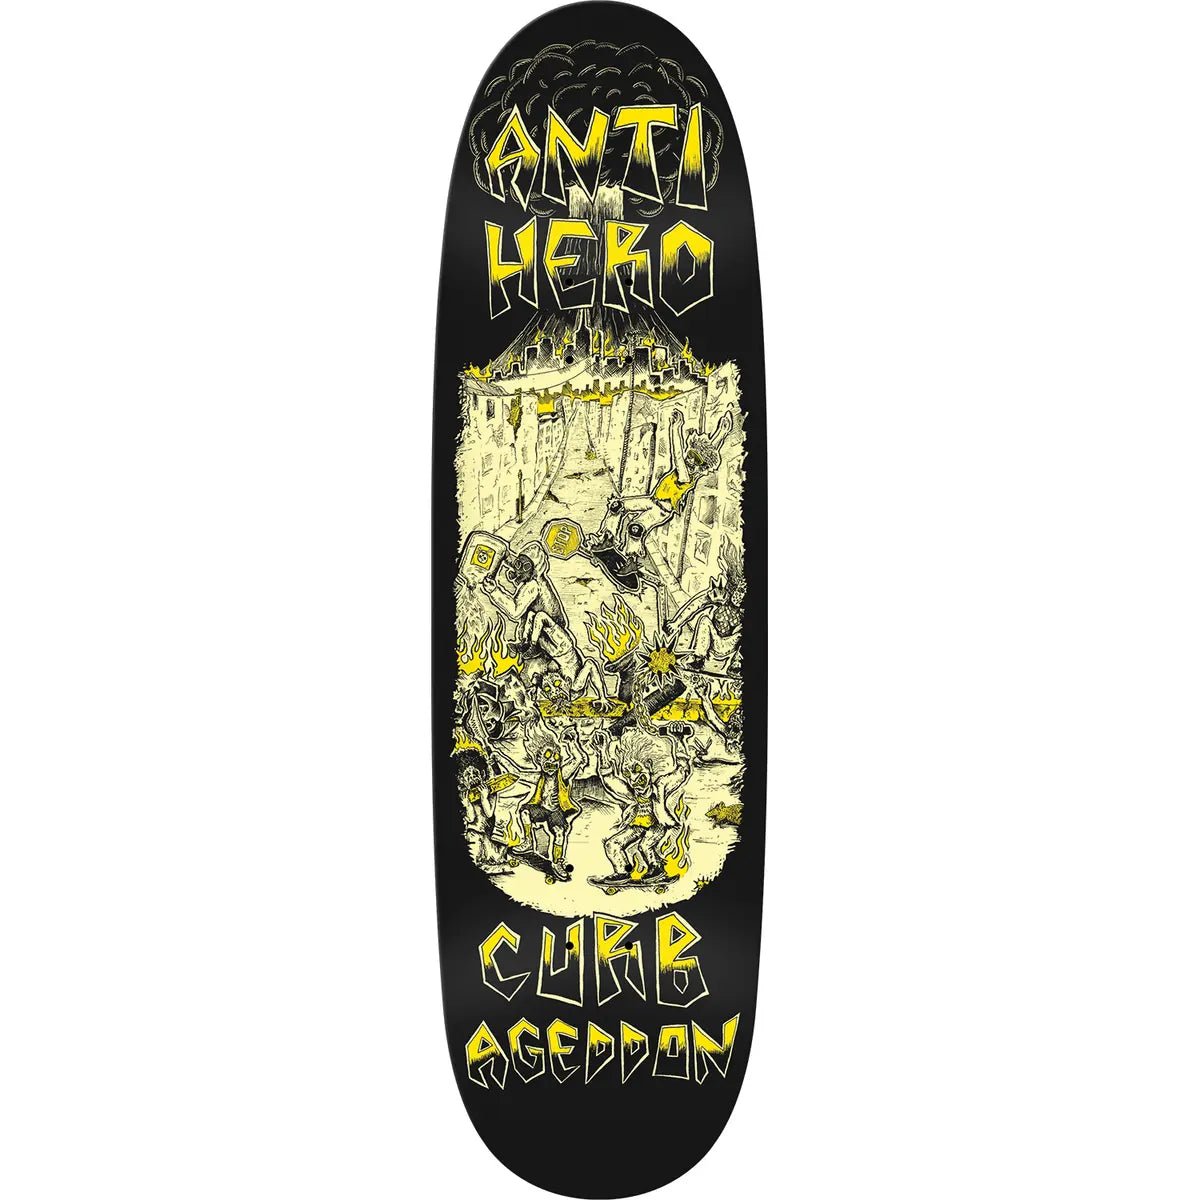 ANTIHERO SKATEBOARDS Curb-Ageddon Skateboard Deck 9.18'' - SkateTillDeath.com